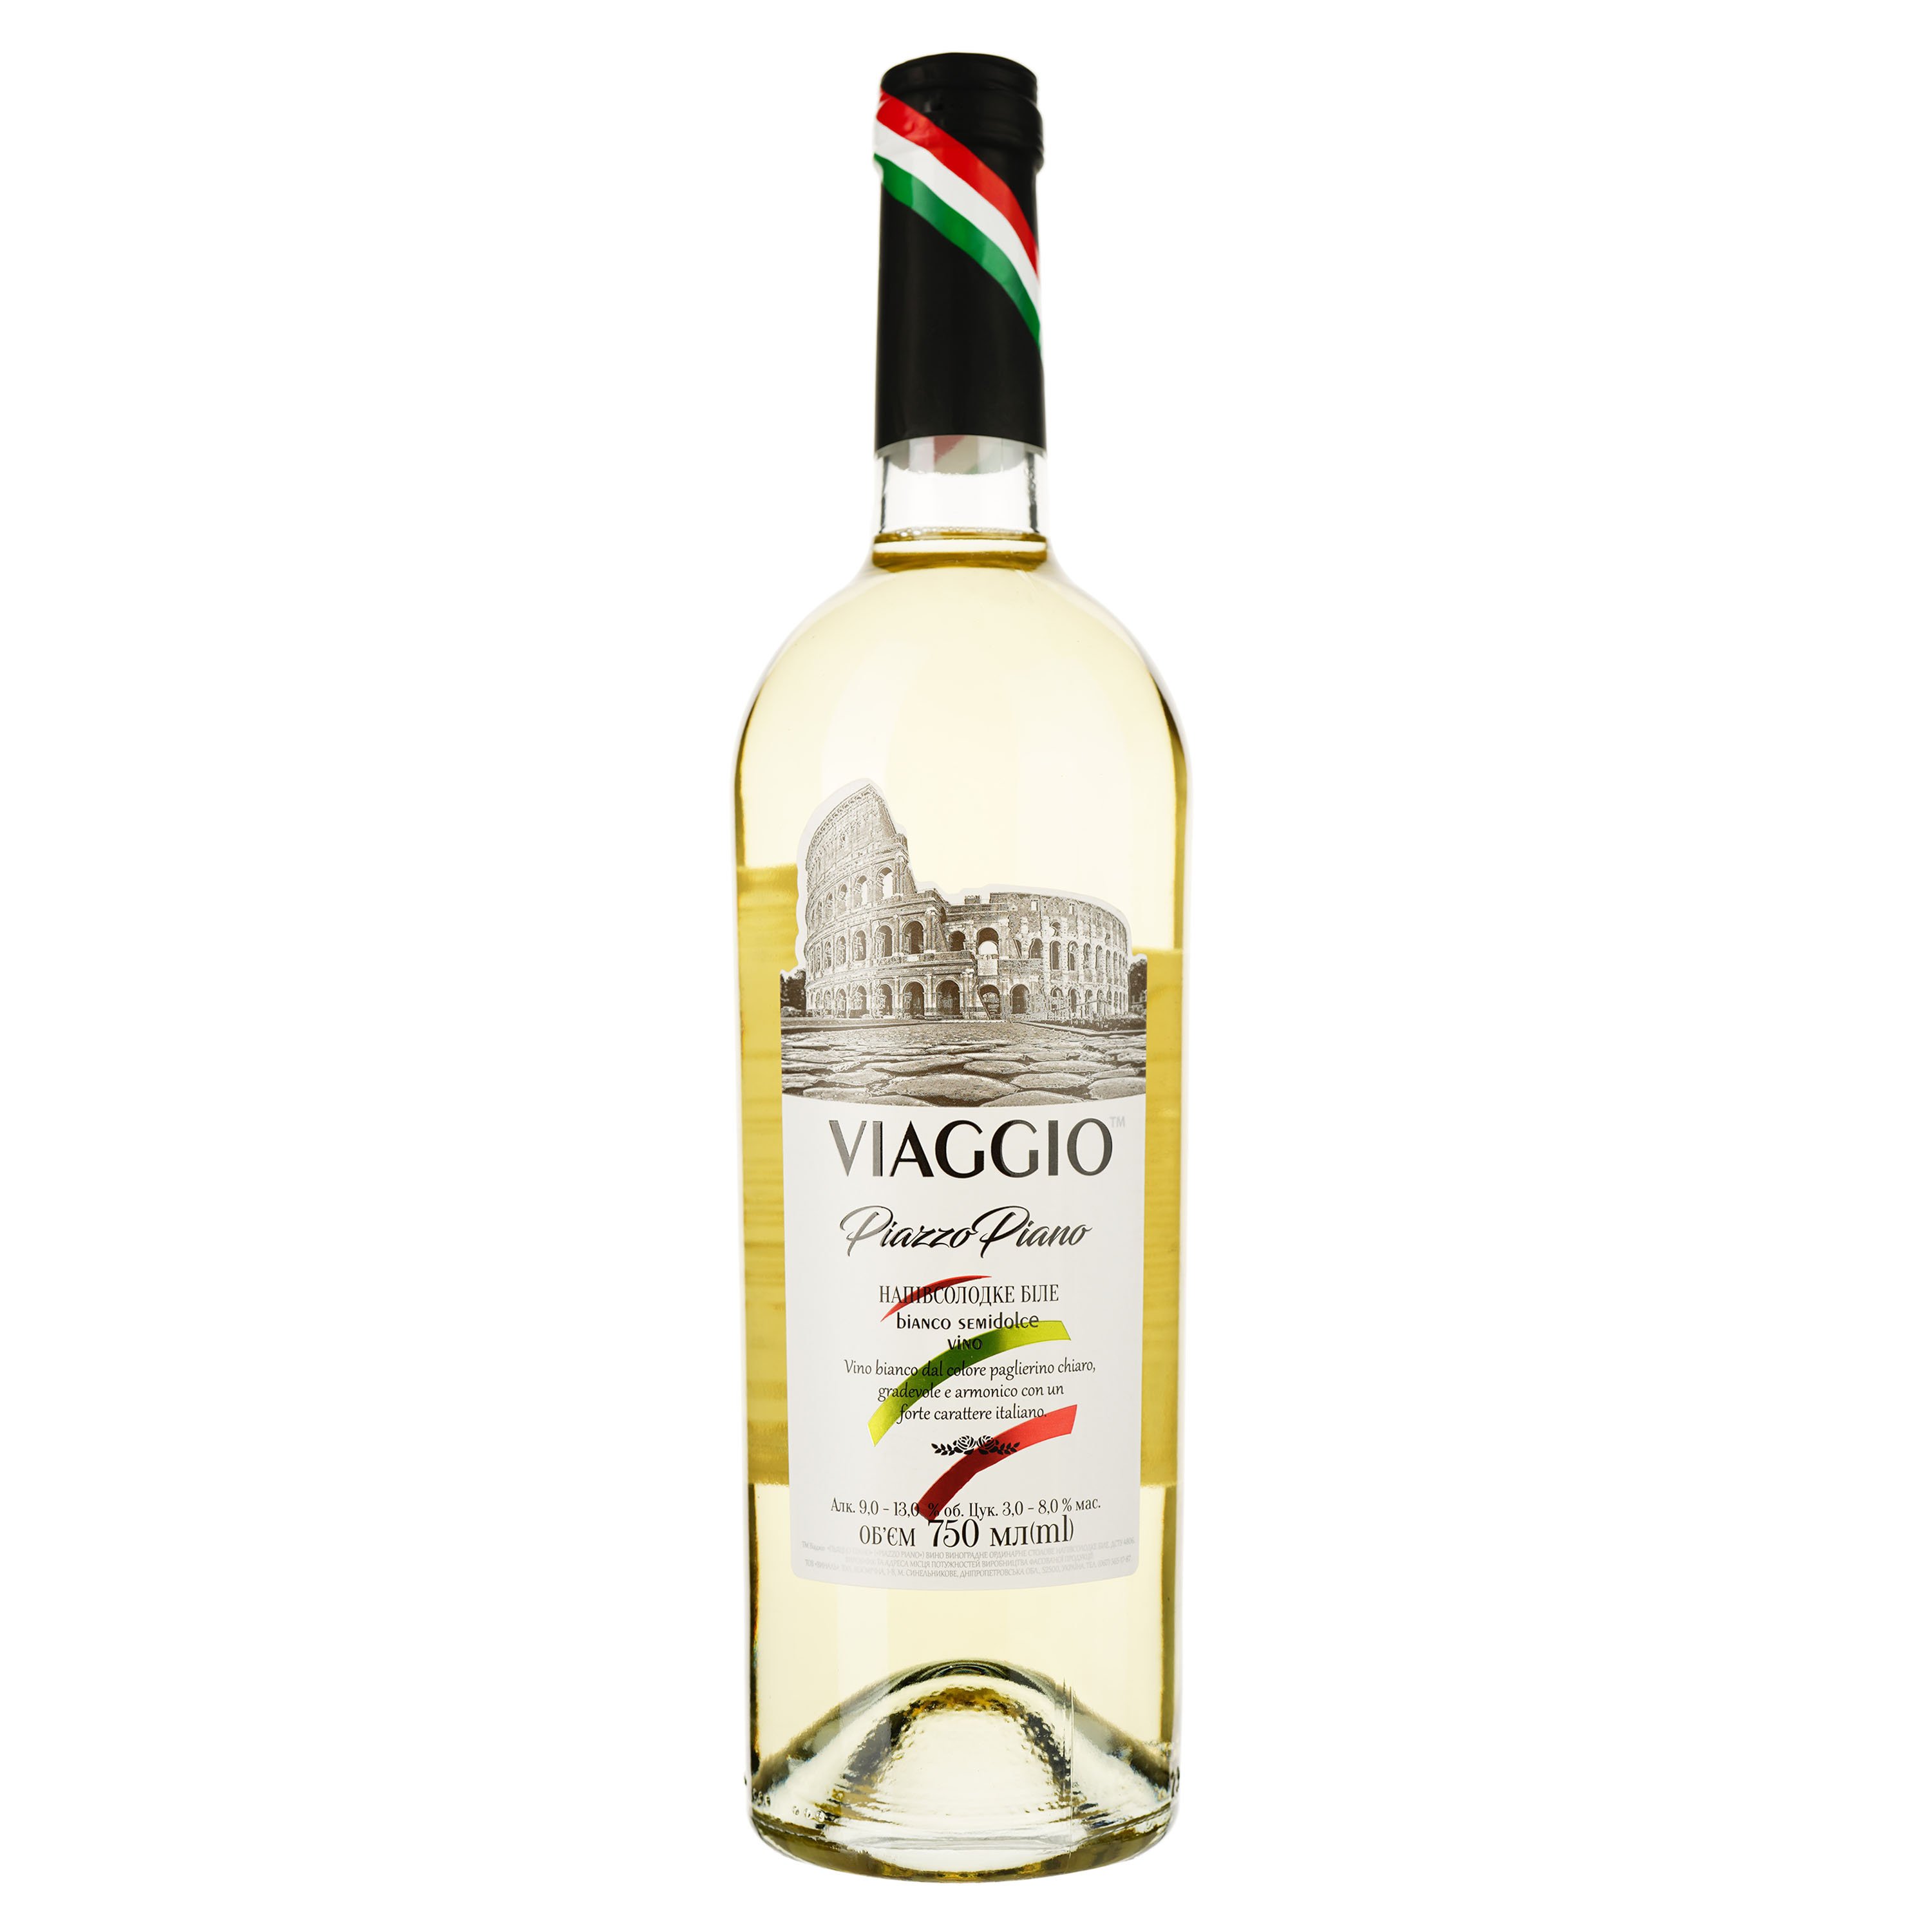 Вино Viaggio Piazzo Piano, біле, напівсолодке, 0,75 л - фото 1